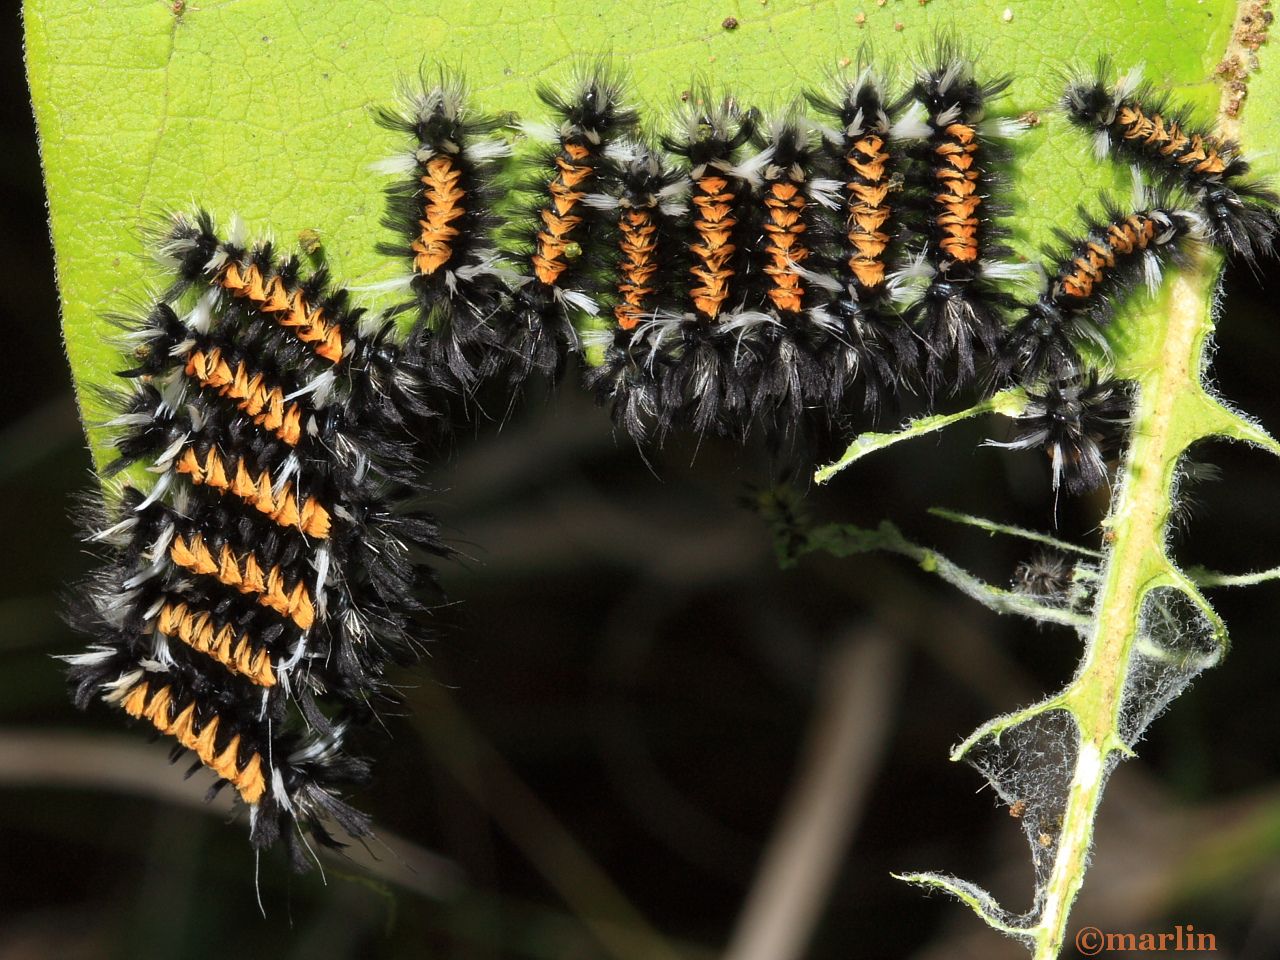 Milkweed tussock moth caterpillars gregarious feeding